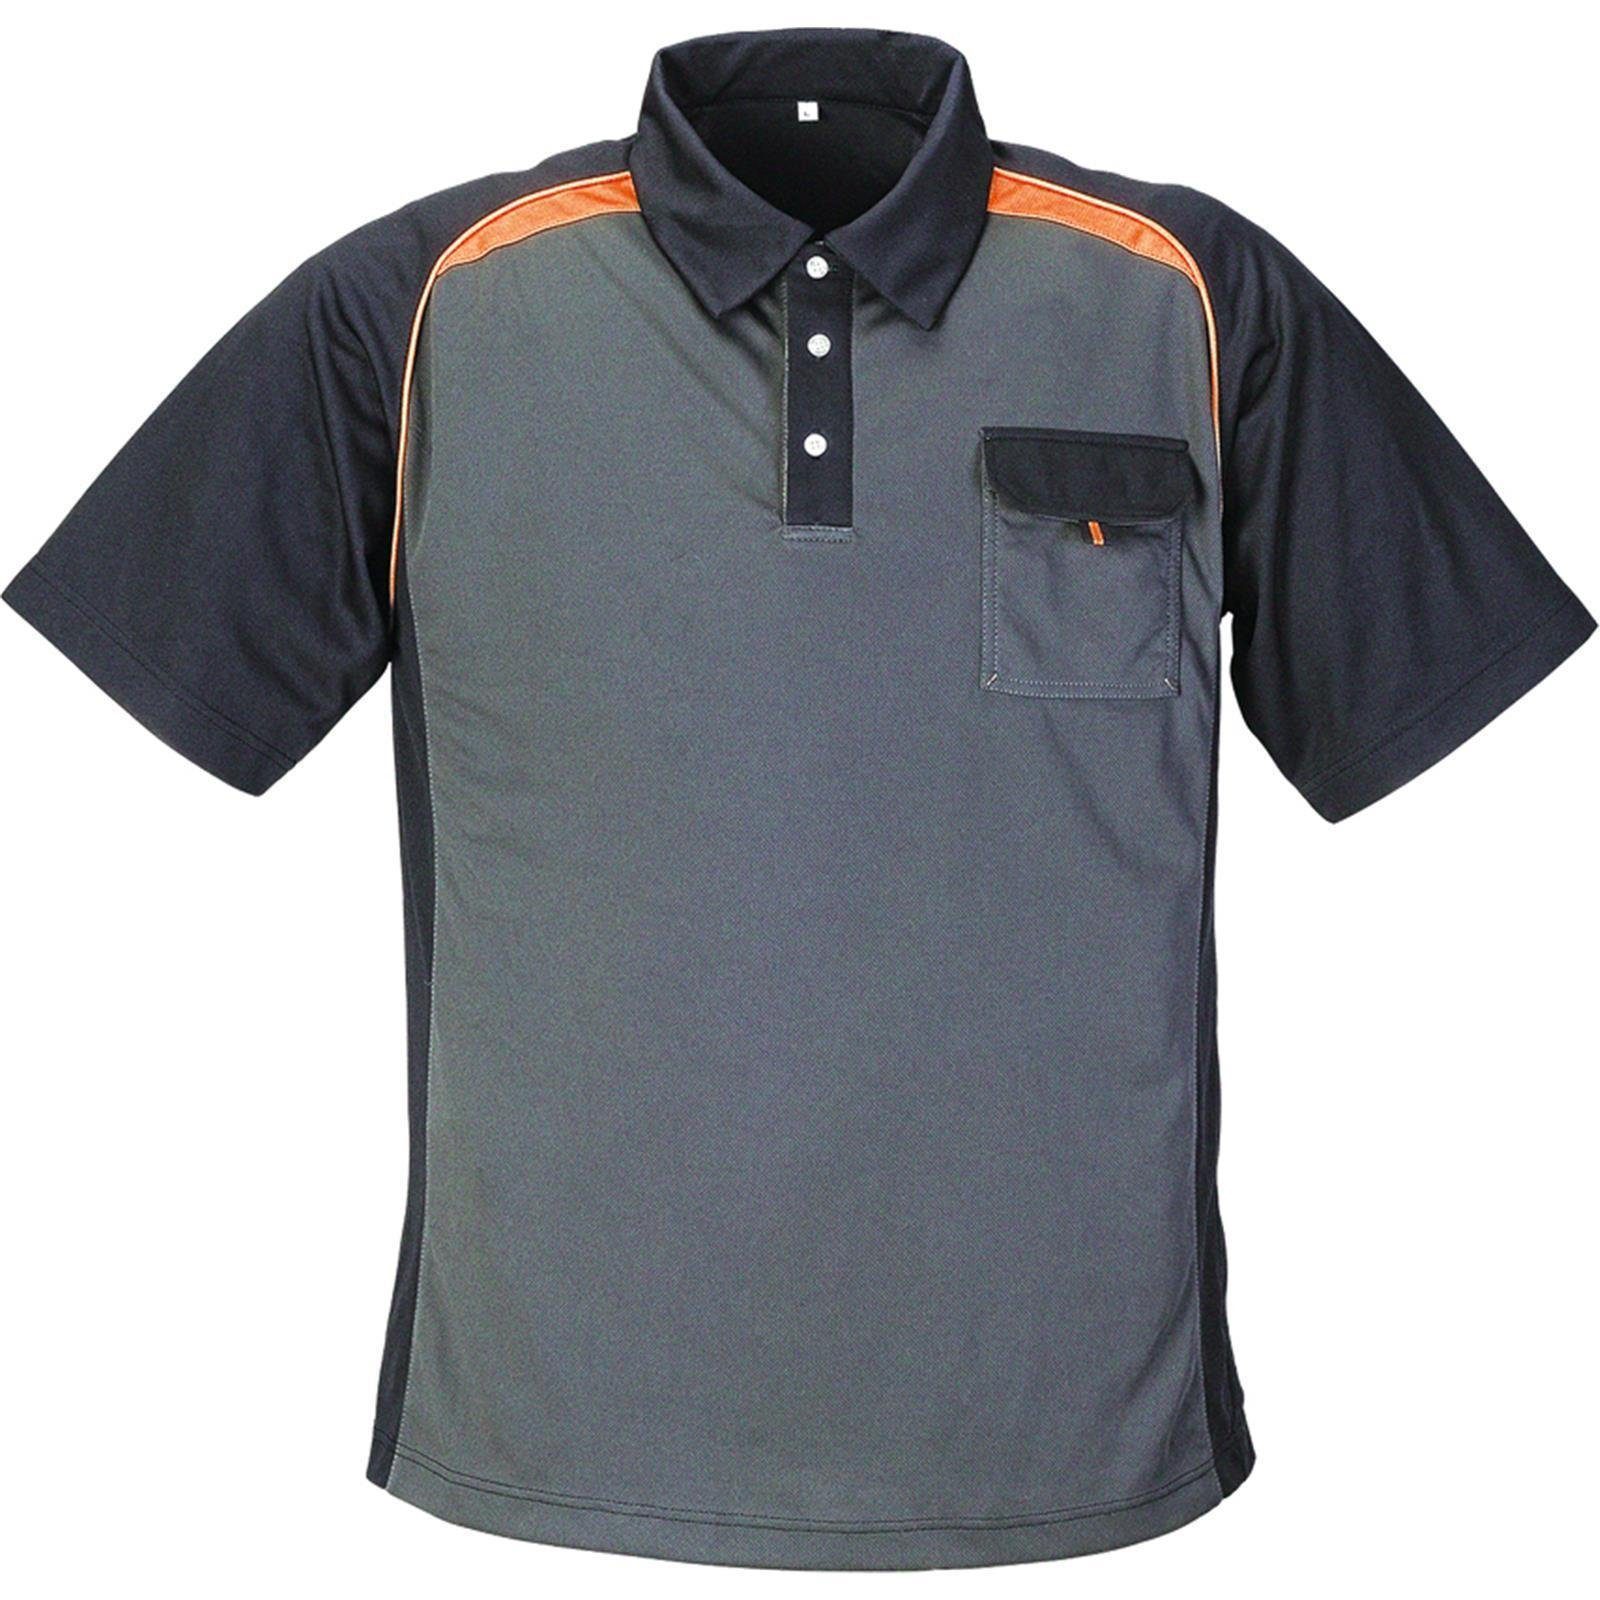 grau/schwarz/orange Terratrend Job Poloshirt